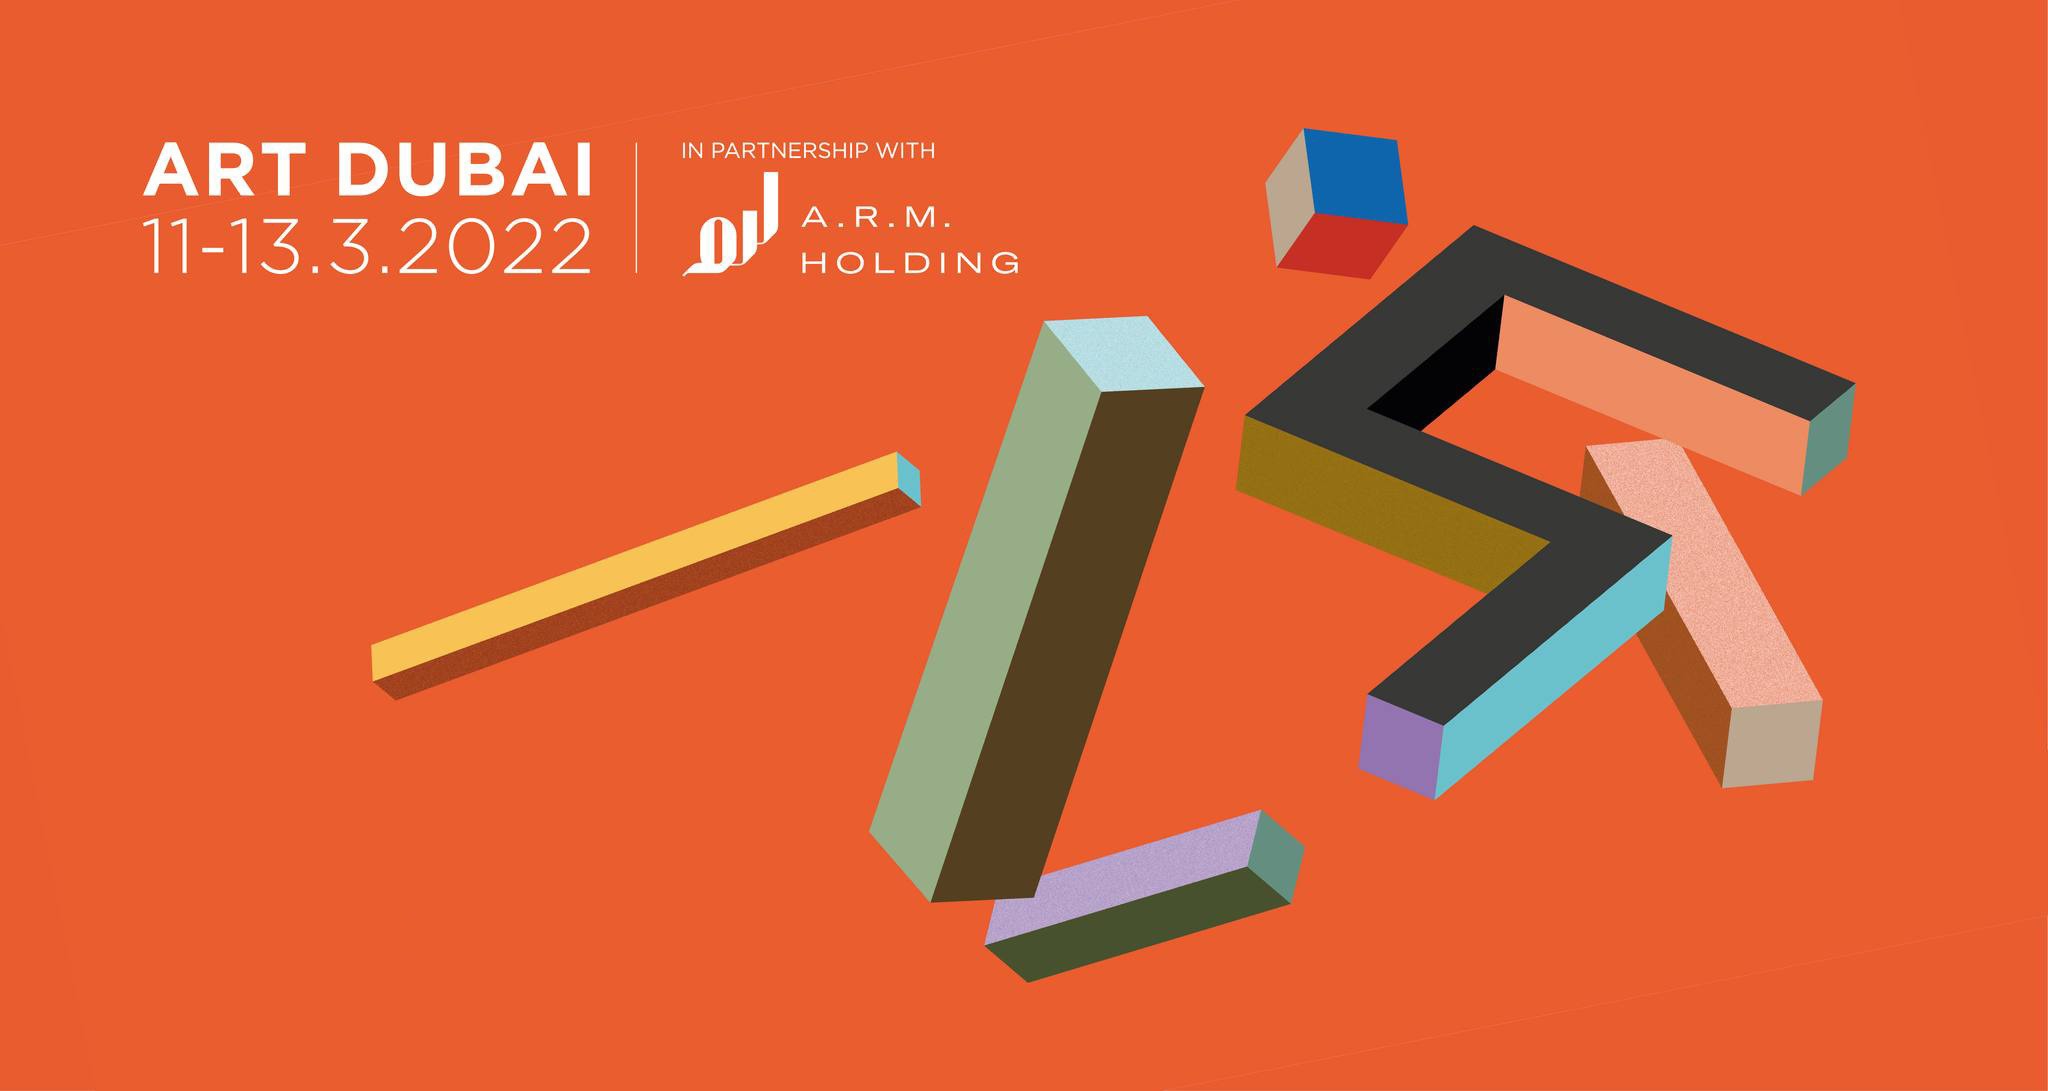 Art Dubai 2022 - Coming Soon in UAE